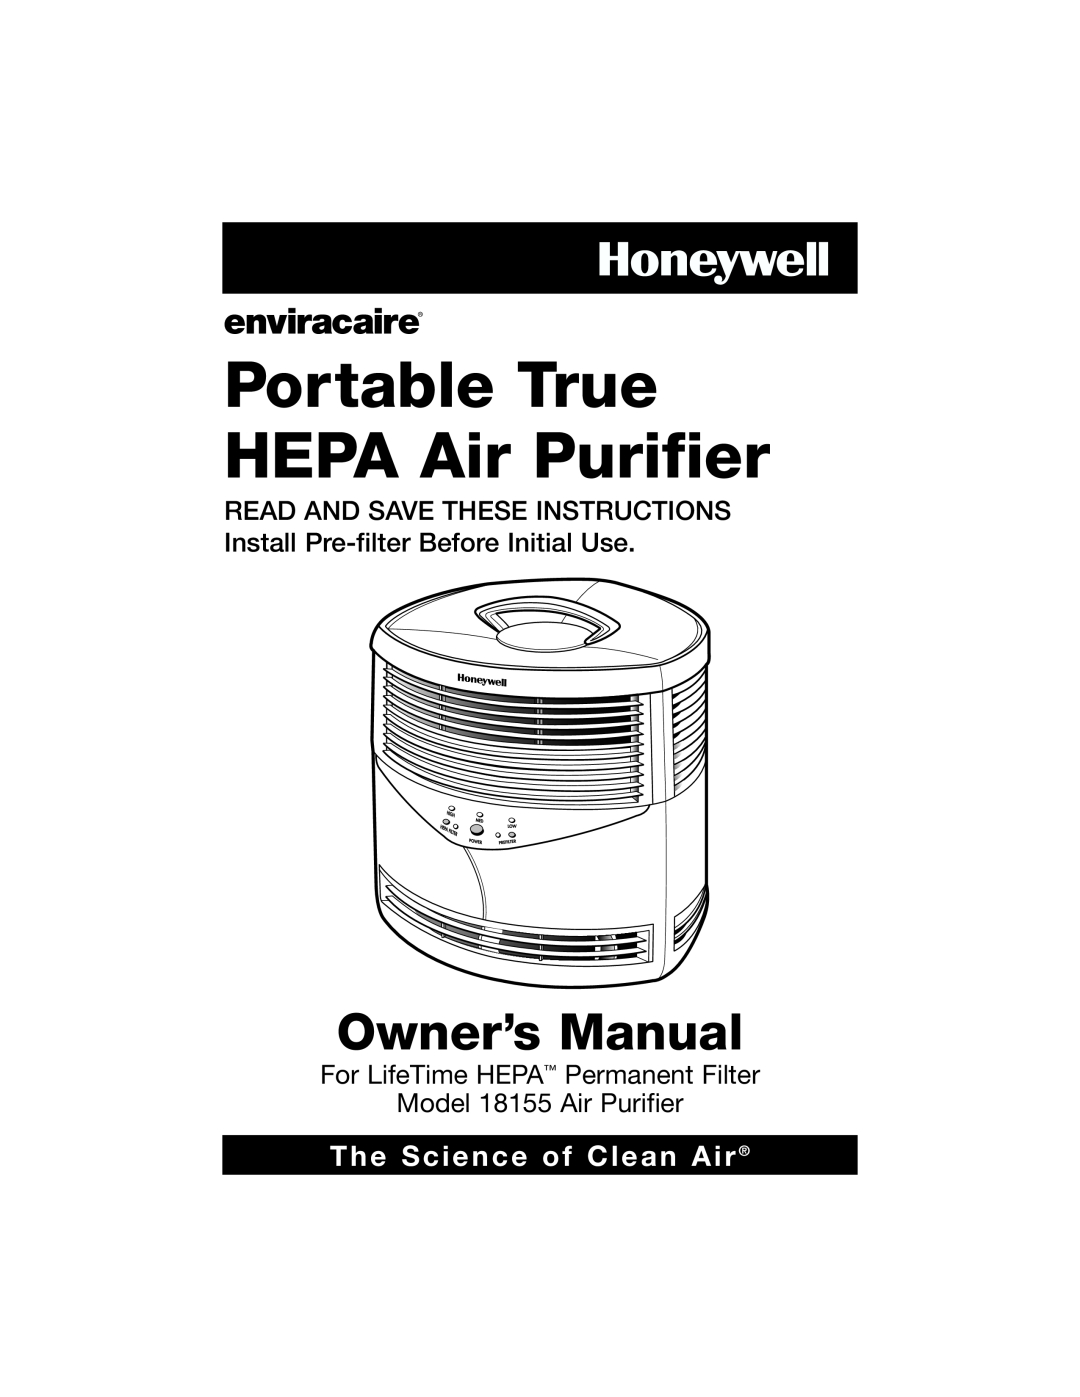 Honeywell 18155 owner manual Portable True HEPA Air Purifier, The Science of Clean Air 